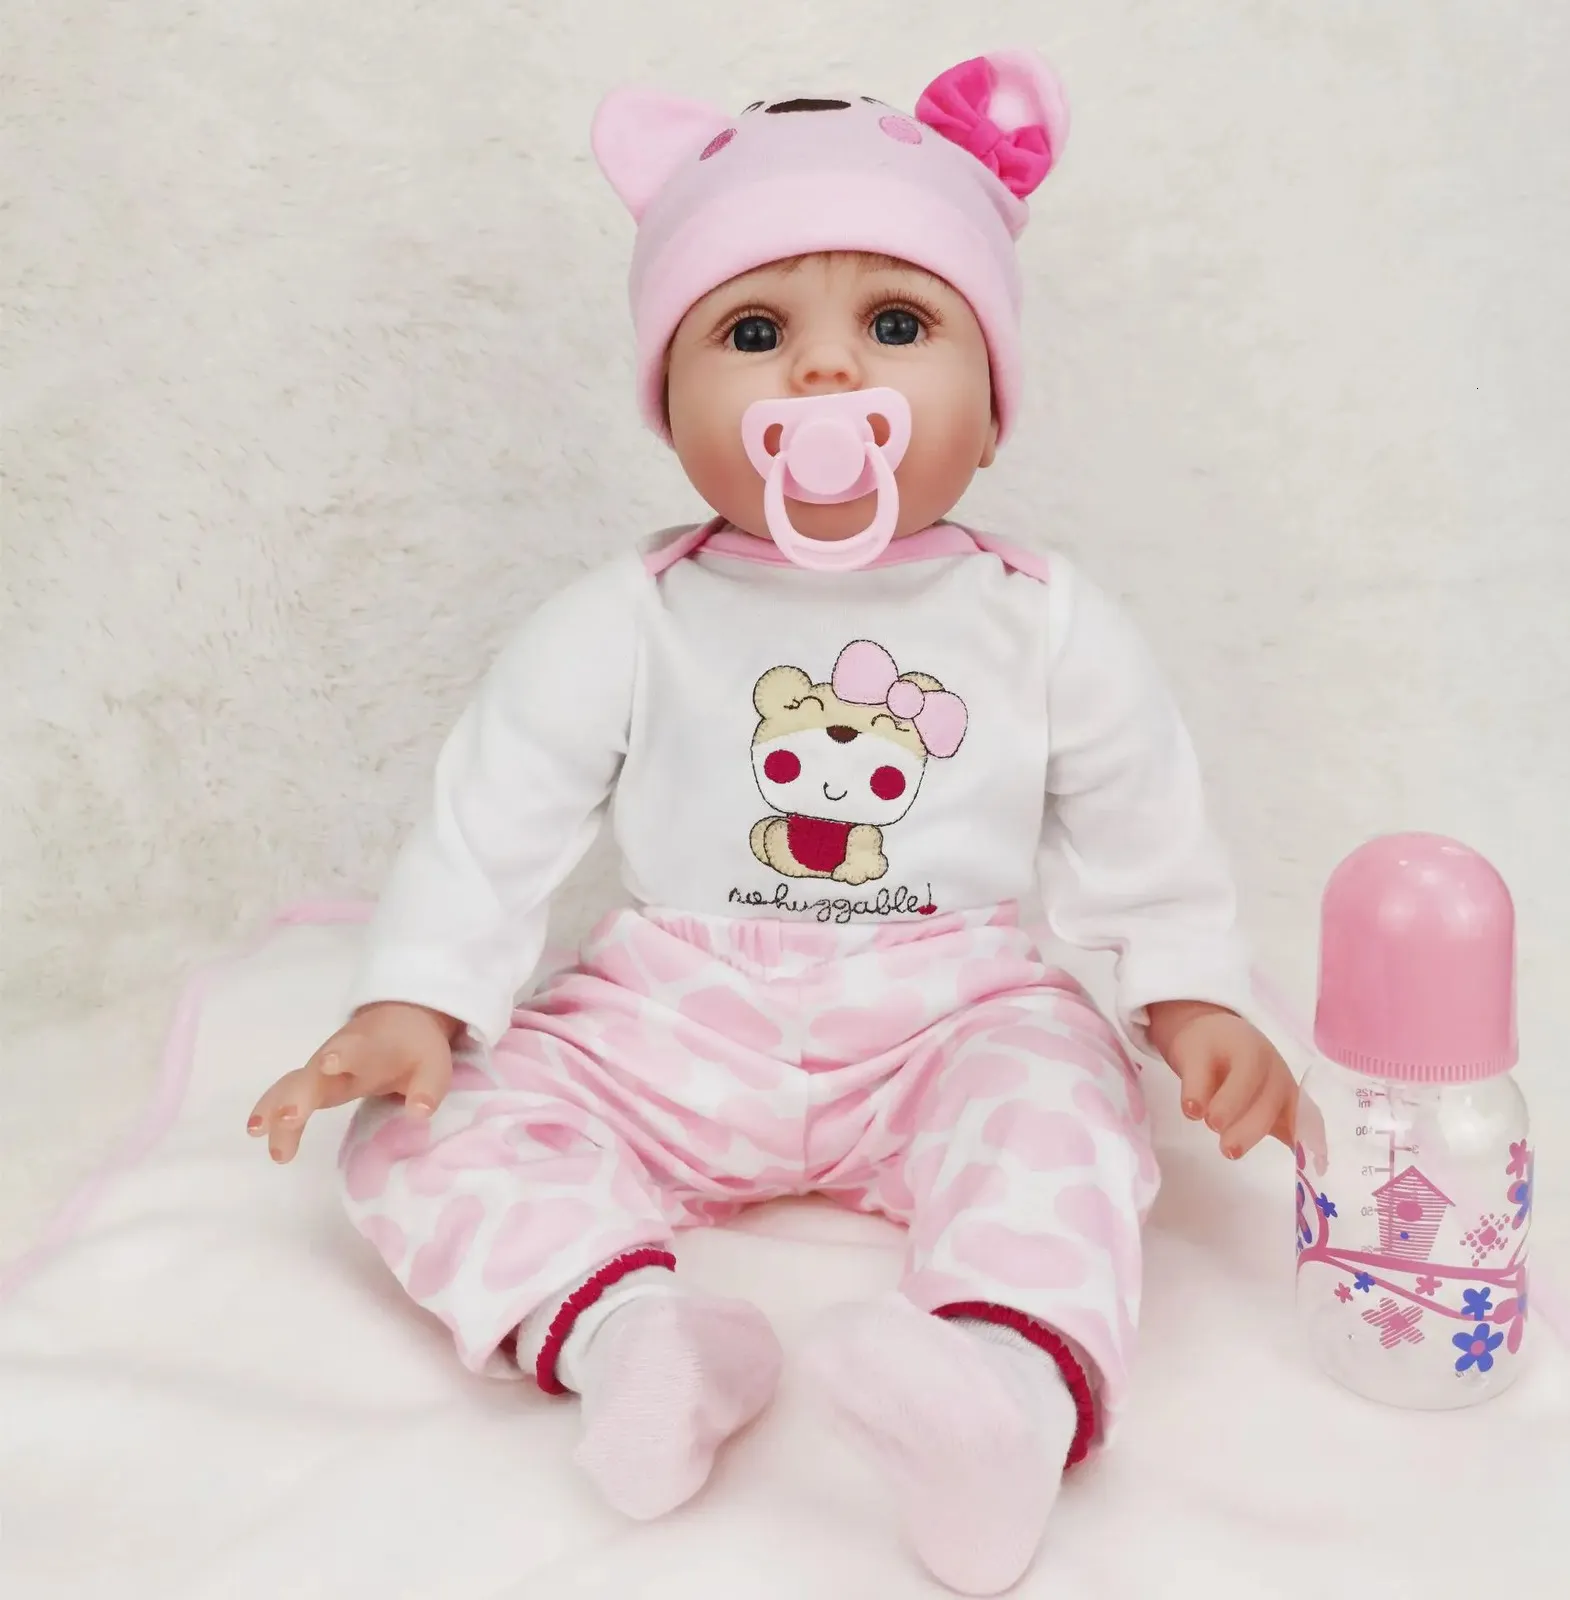 4555cm Realistic Reborn Doll Handmade Soft Cloth Body Baby Dolls Bebe borm Girl With Pacifier 240223